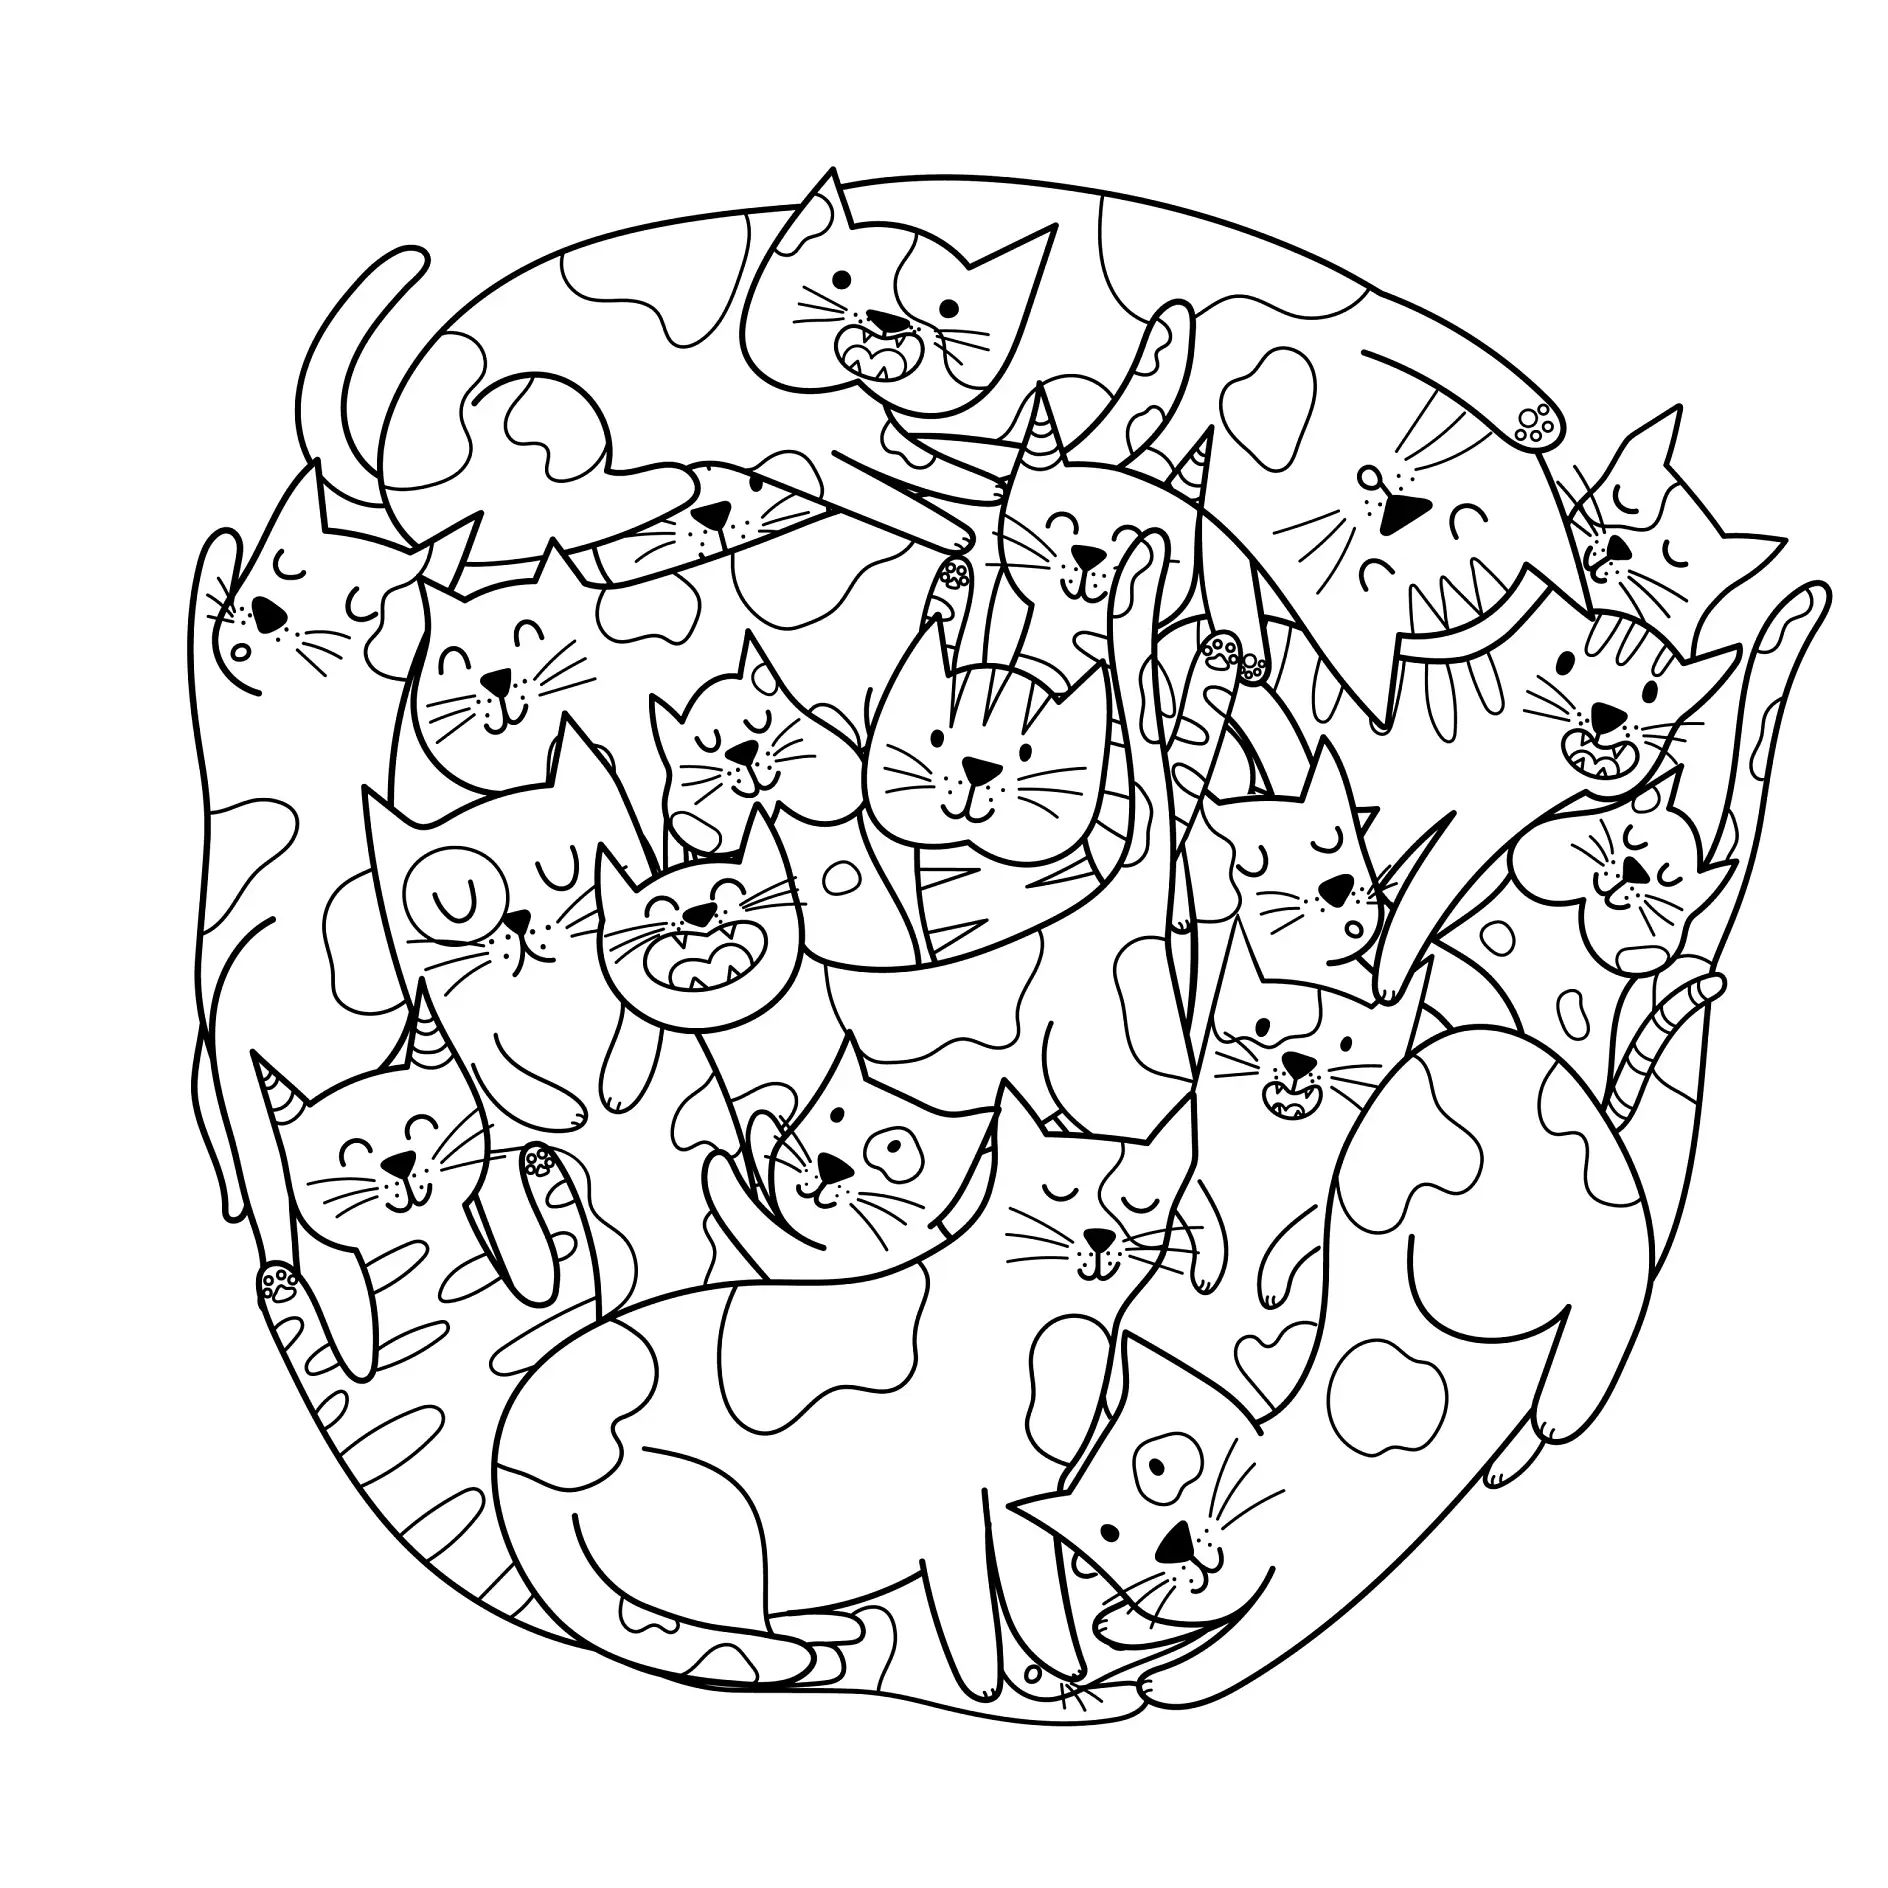 Ausmalbild Mandala mit vielen spielenden Katzen